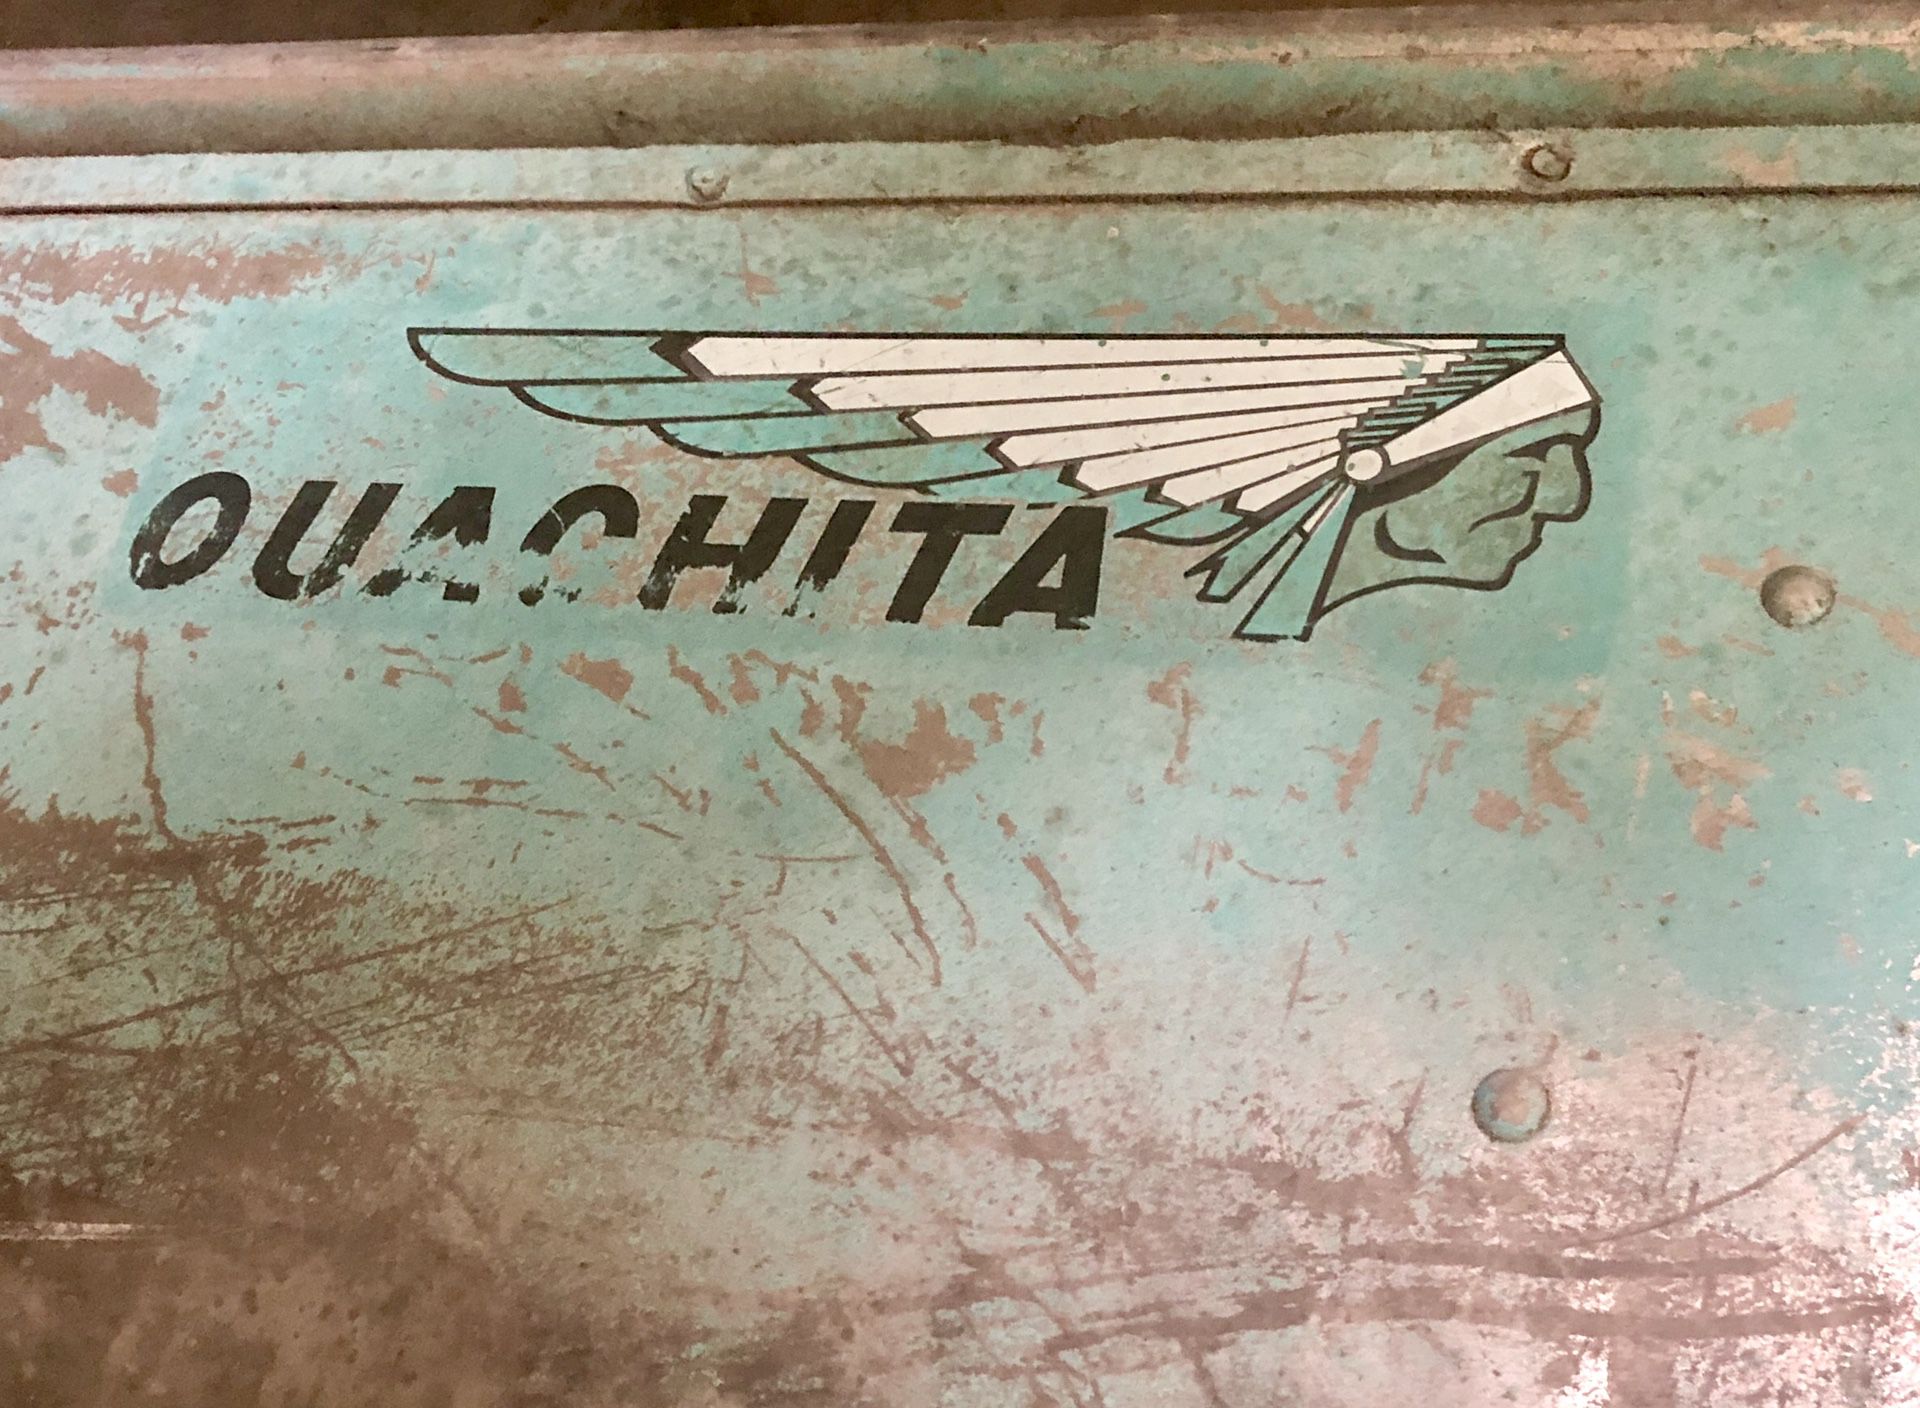 Ouachita Marine 14’ Aluminum Fishing Boat